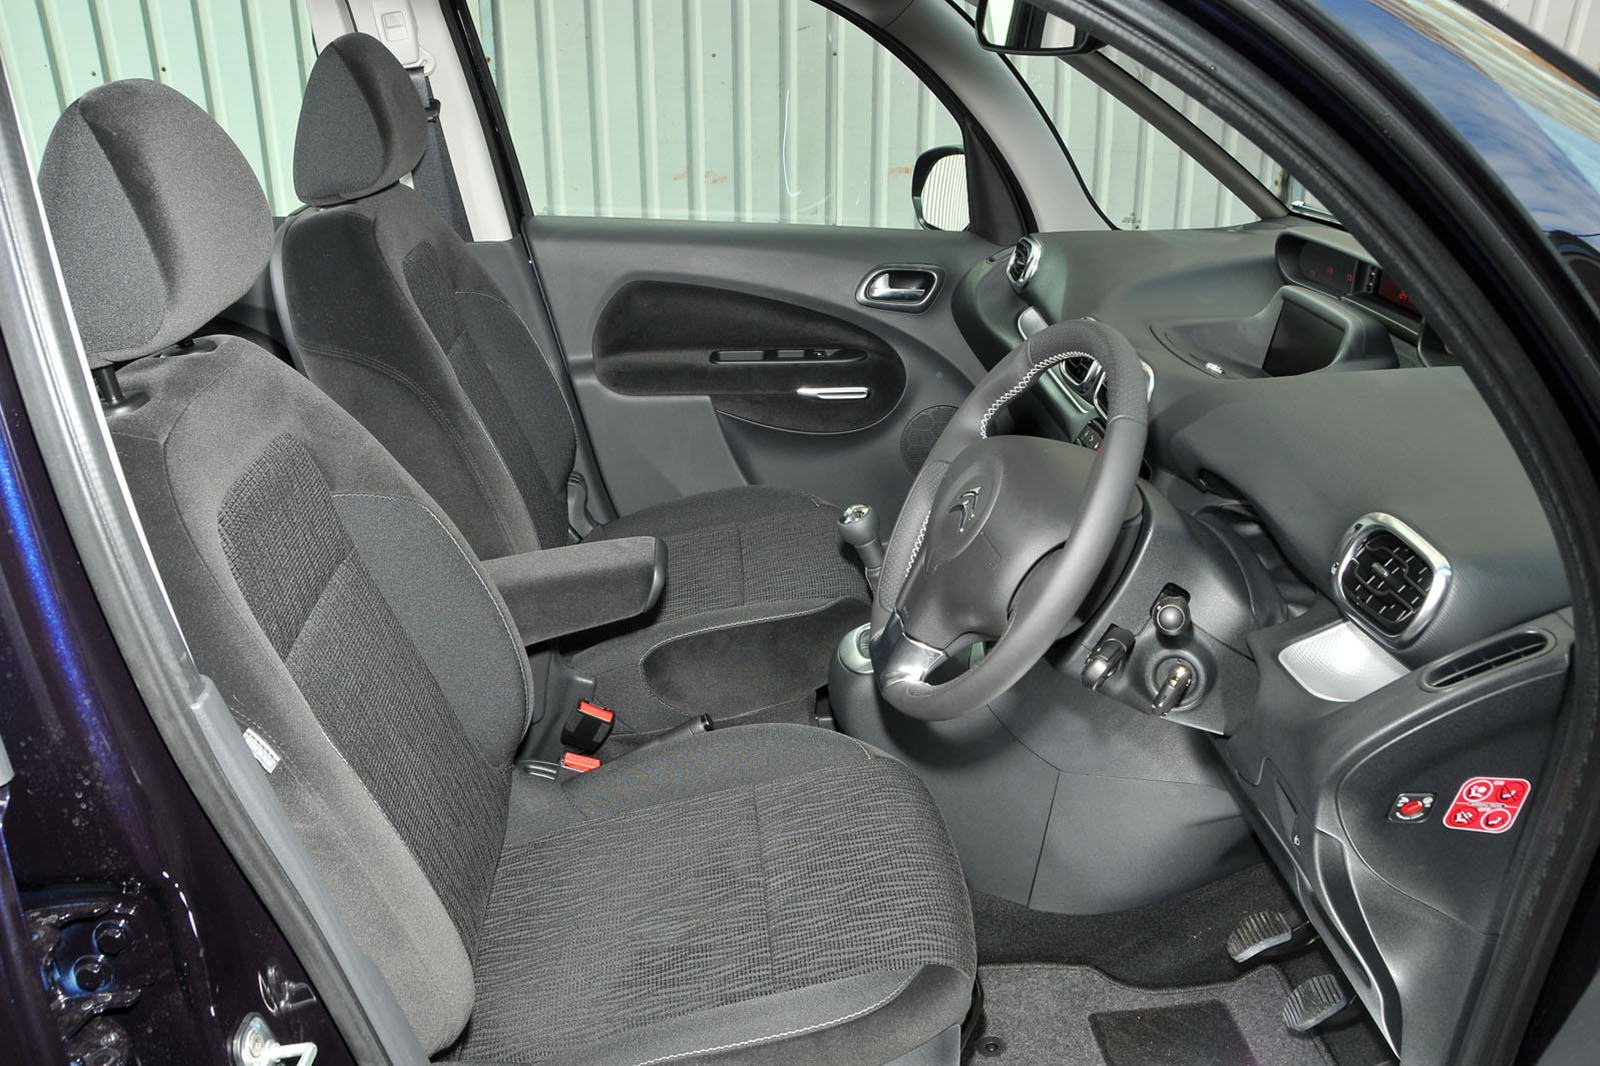 Citroën C3 Picasso interior